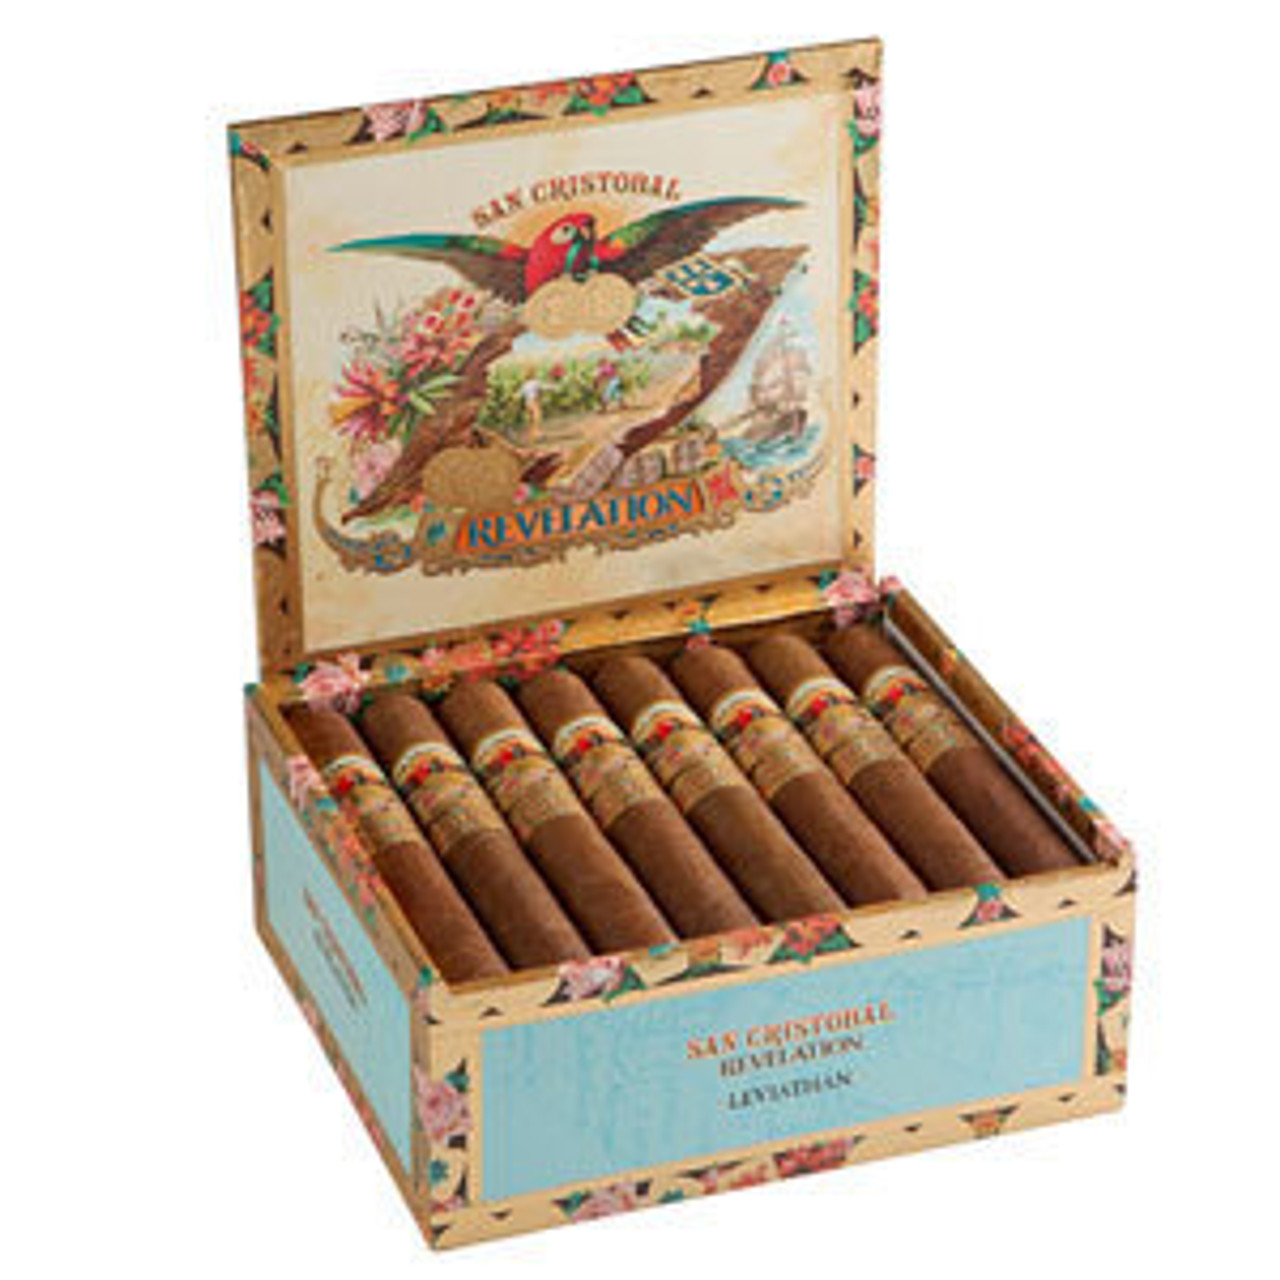 San Cristobal Revelation Leviathan Cigars - 6.5 x 64 (Box of 24) *Box